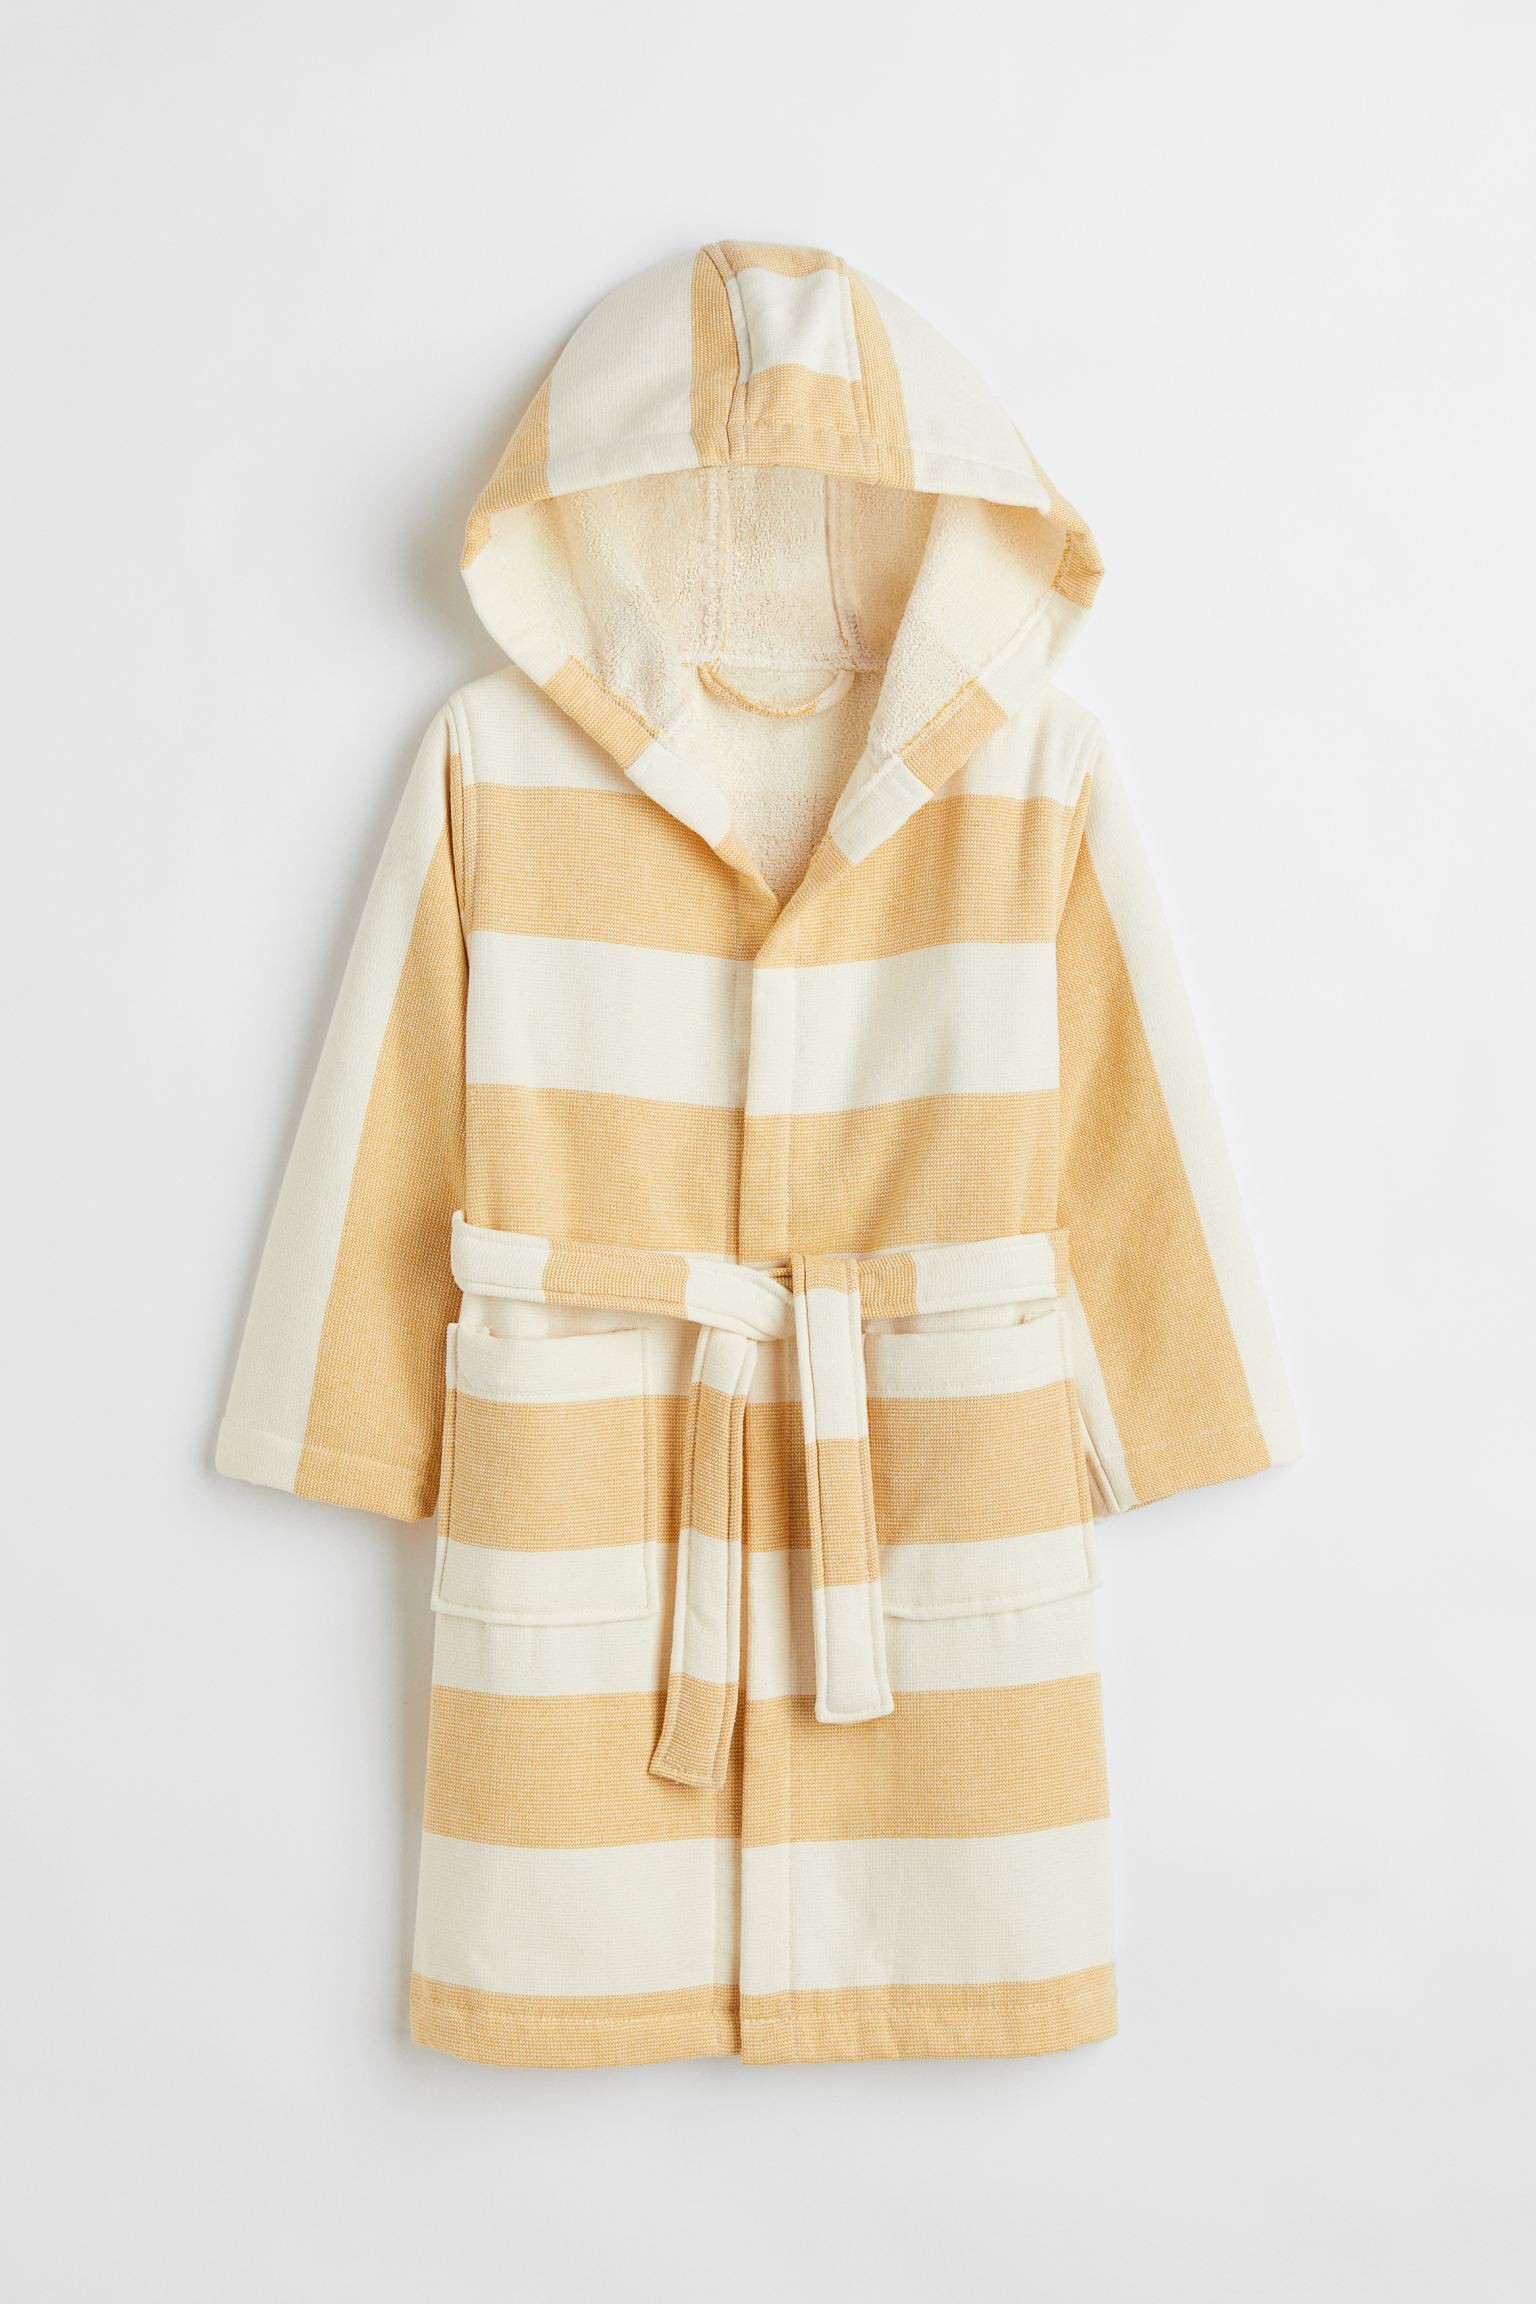 H&M Home Полосатый махровый халат, Желтый/Полосатый, Разные размеры 1049156001 | 1049156001